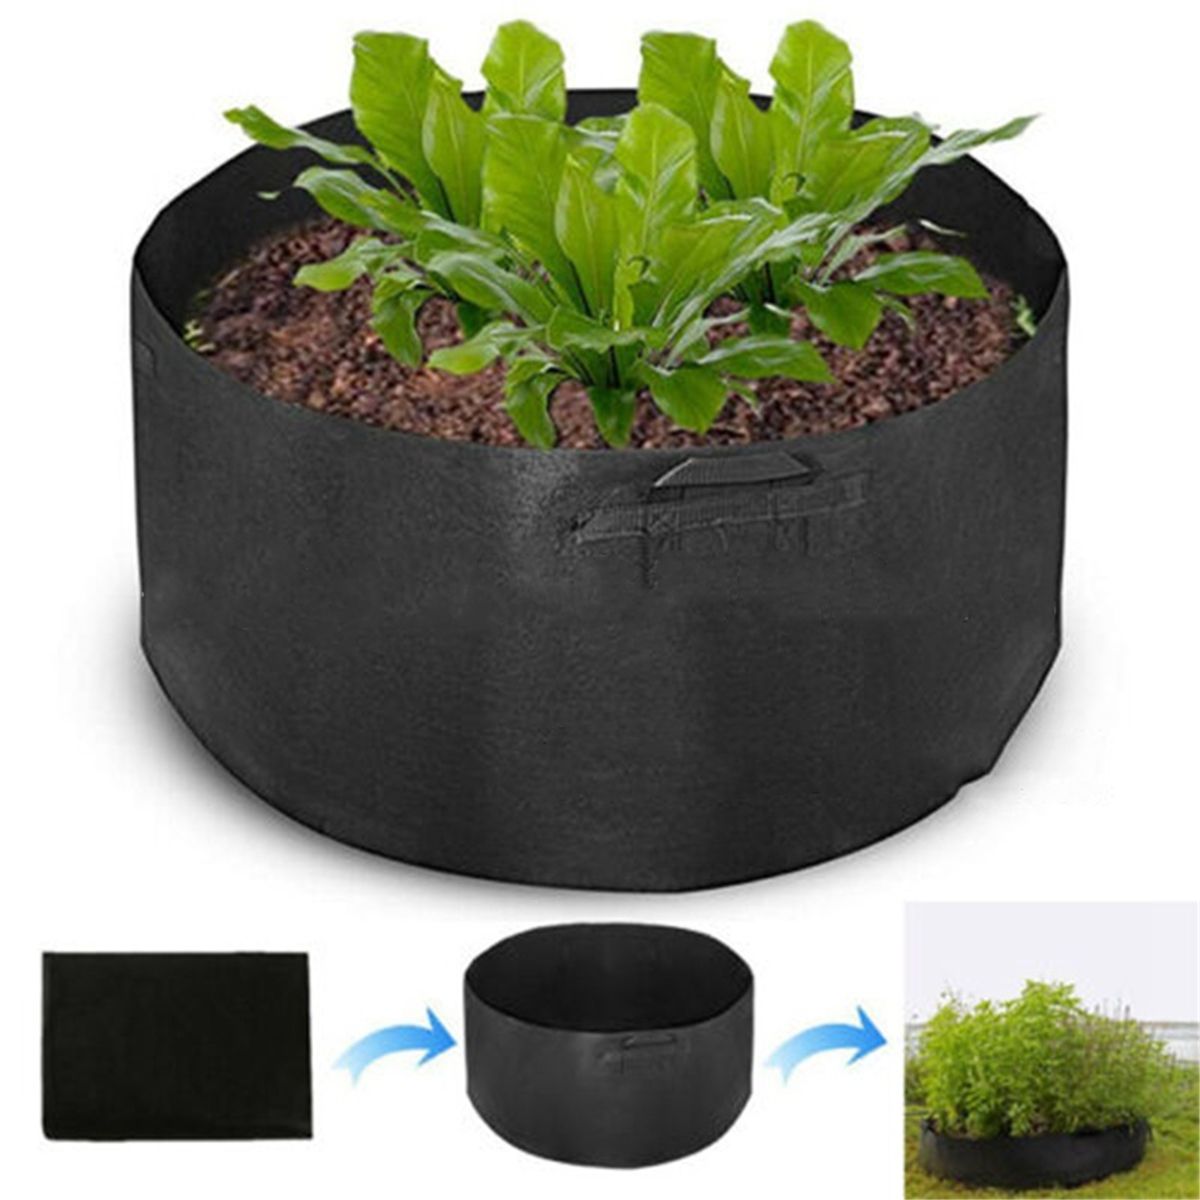 Garden-Raised-Plant-Bed-Flower-Planter-Elevated-Vegetable-Box-Planting-Grow-Bag-1563670